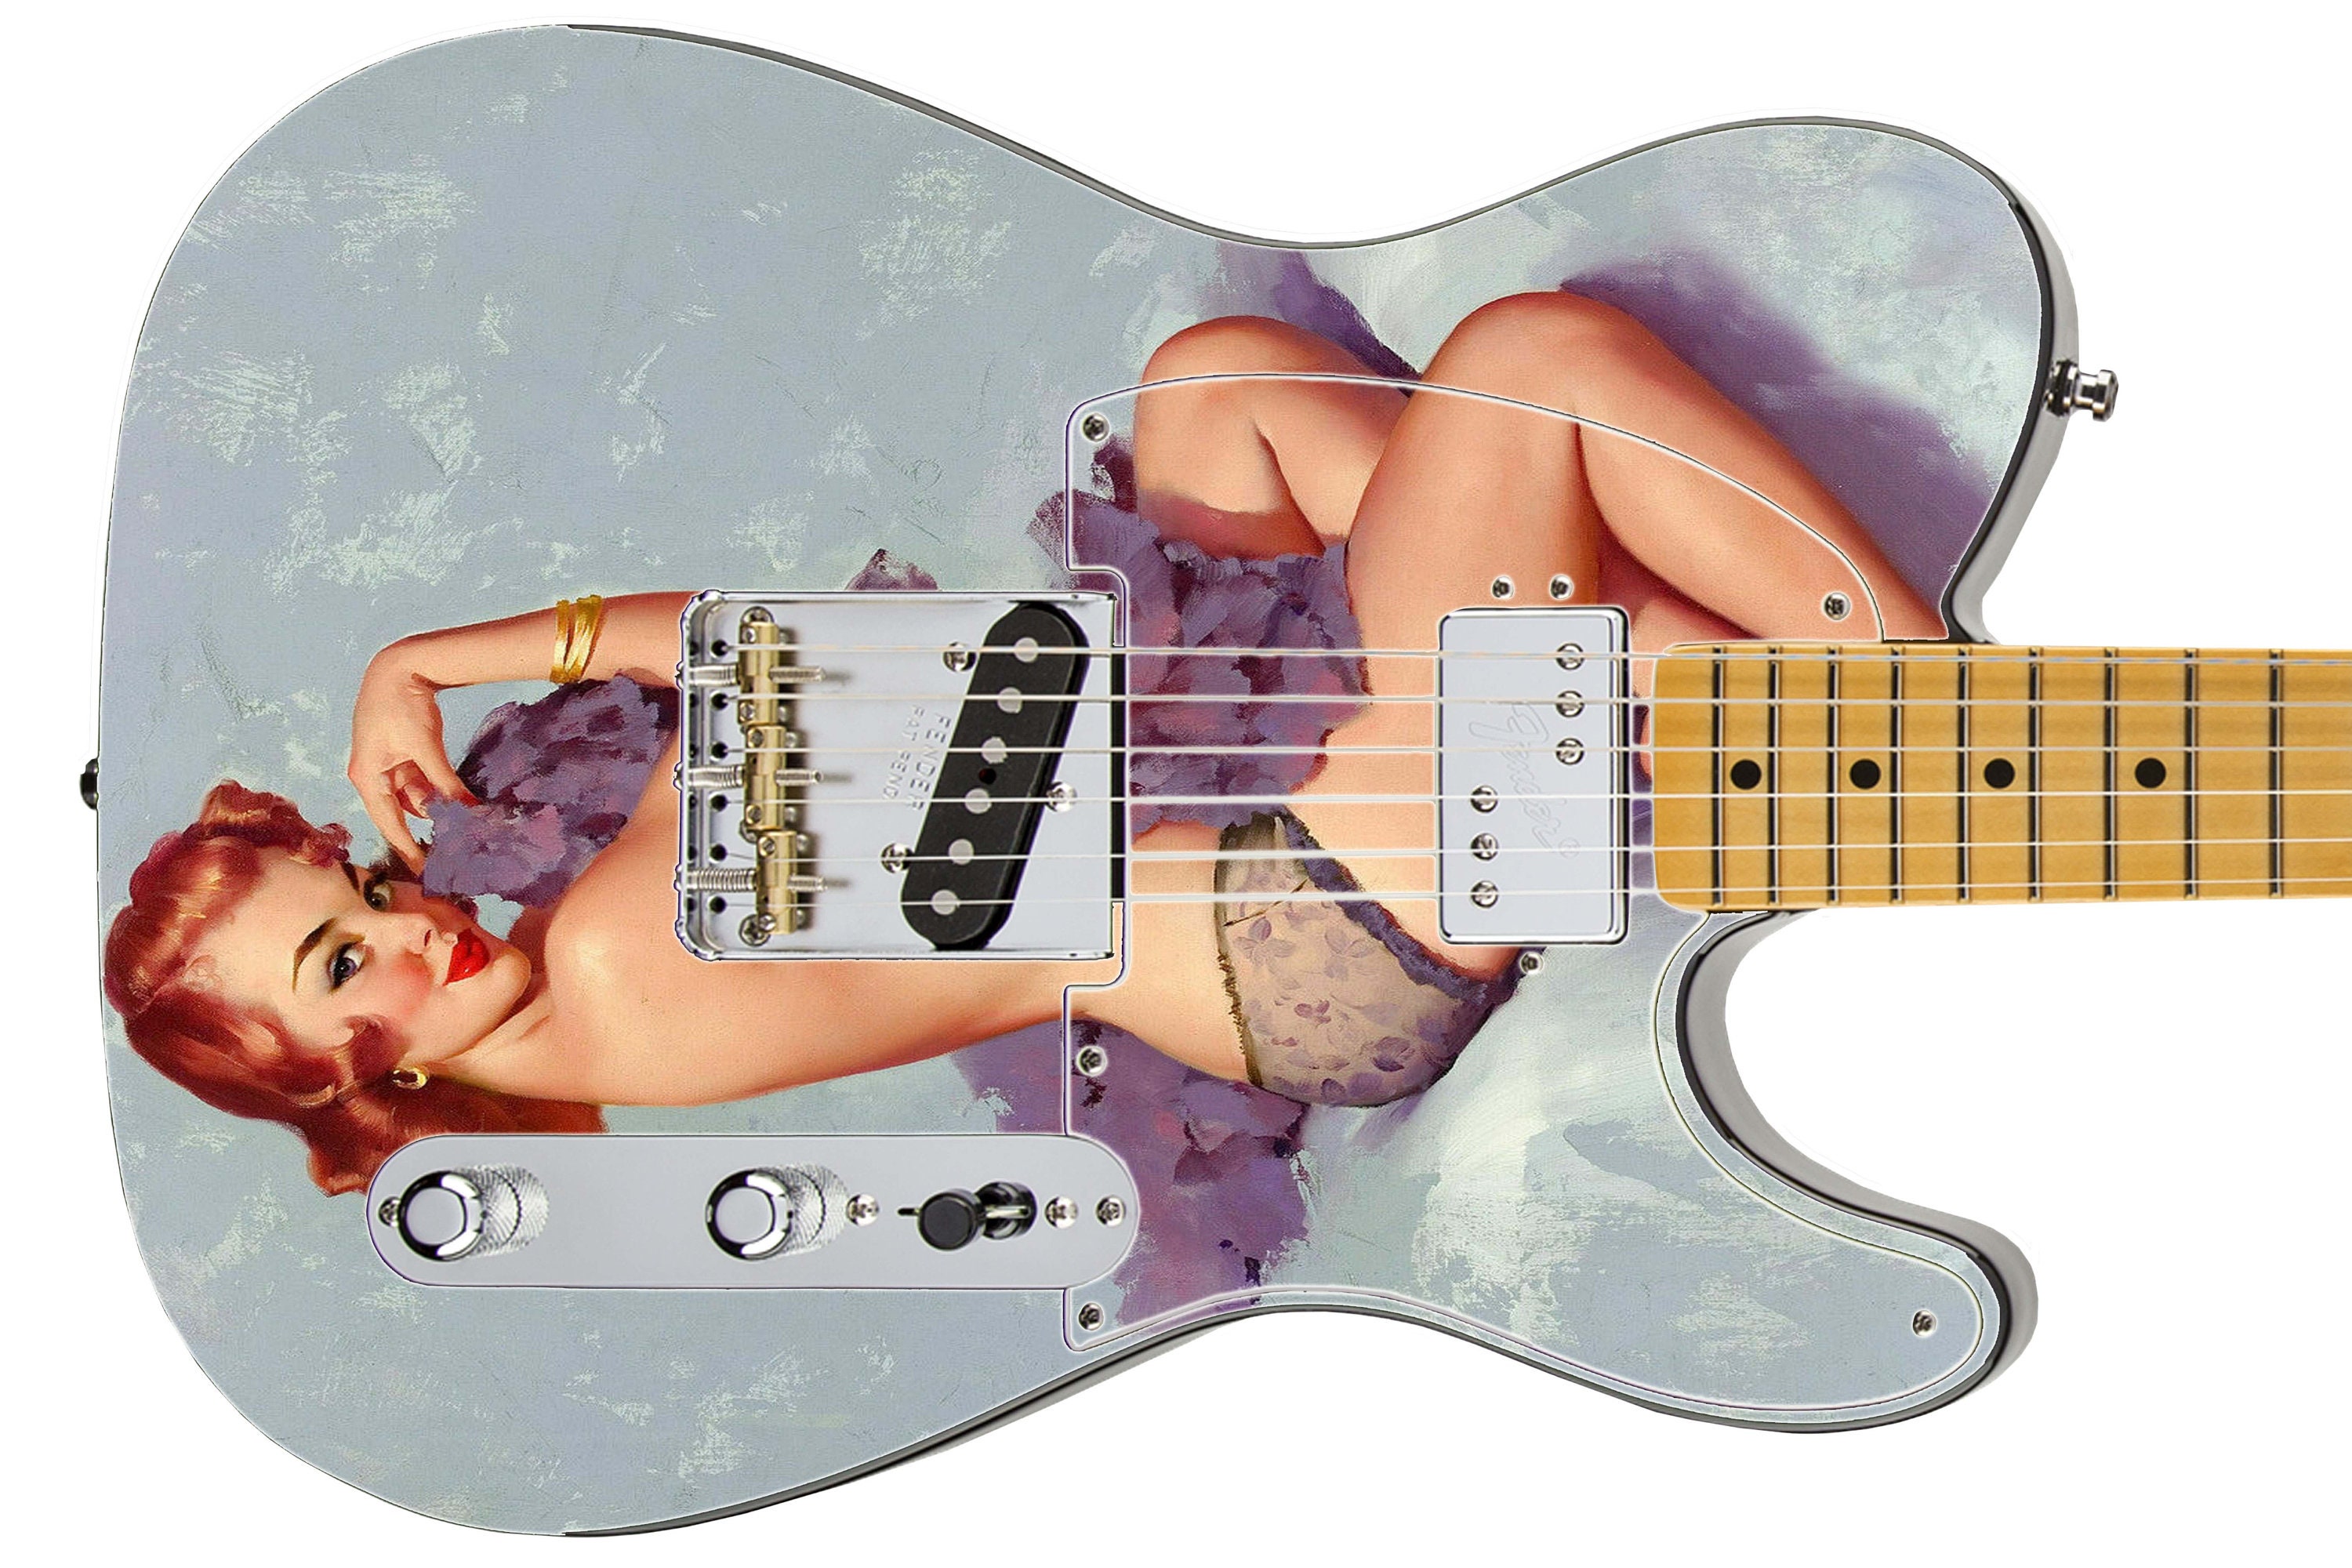 Epic Customs - Bape Shark x LV inspired guitar wrap.